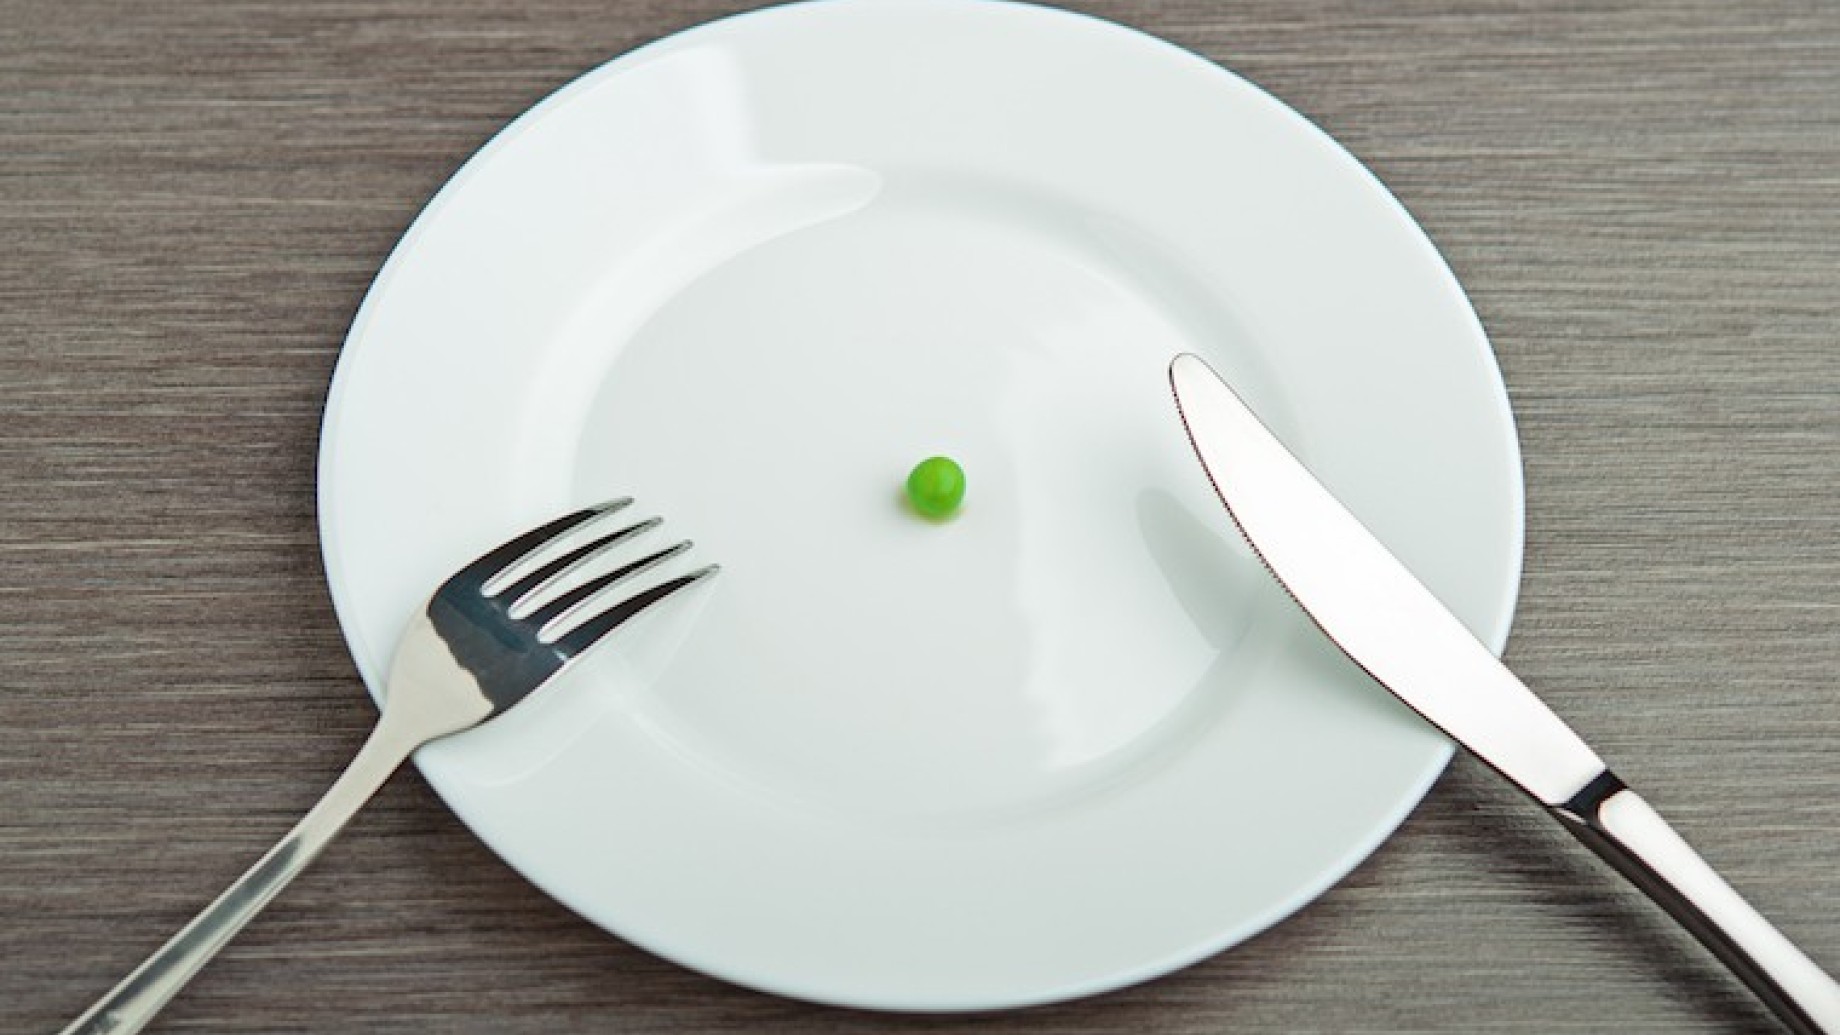 empty-plate